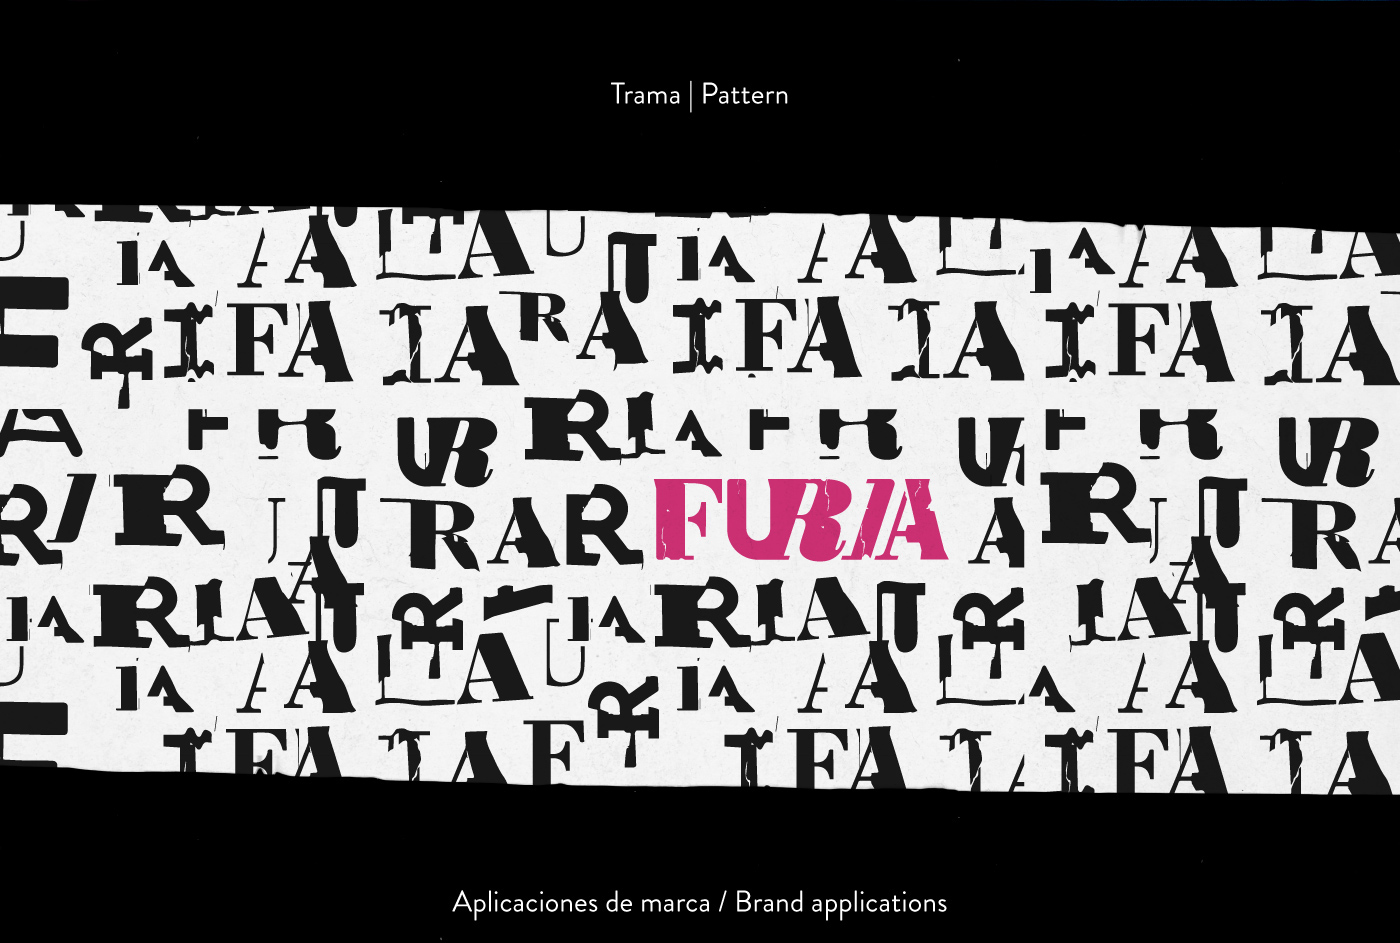 fury art break flyer Website chaos card texture pattern grunge frame shirt handcrafted collage Glitch